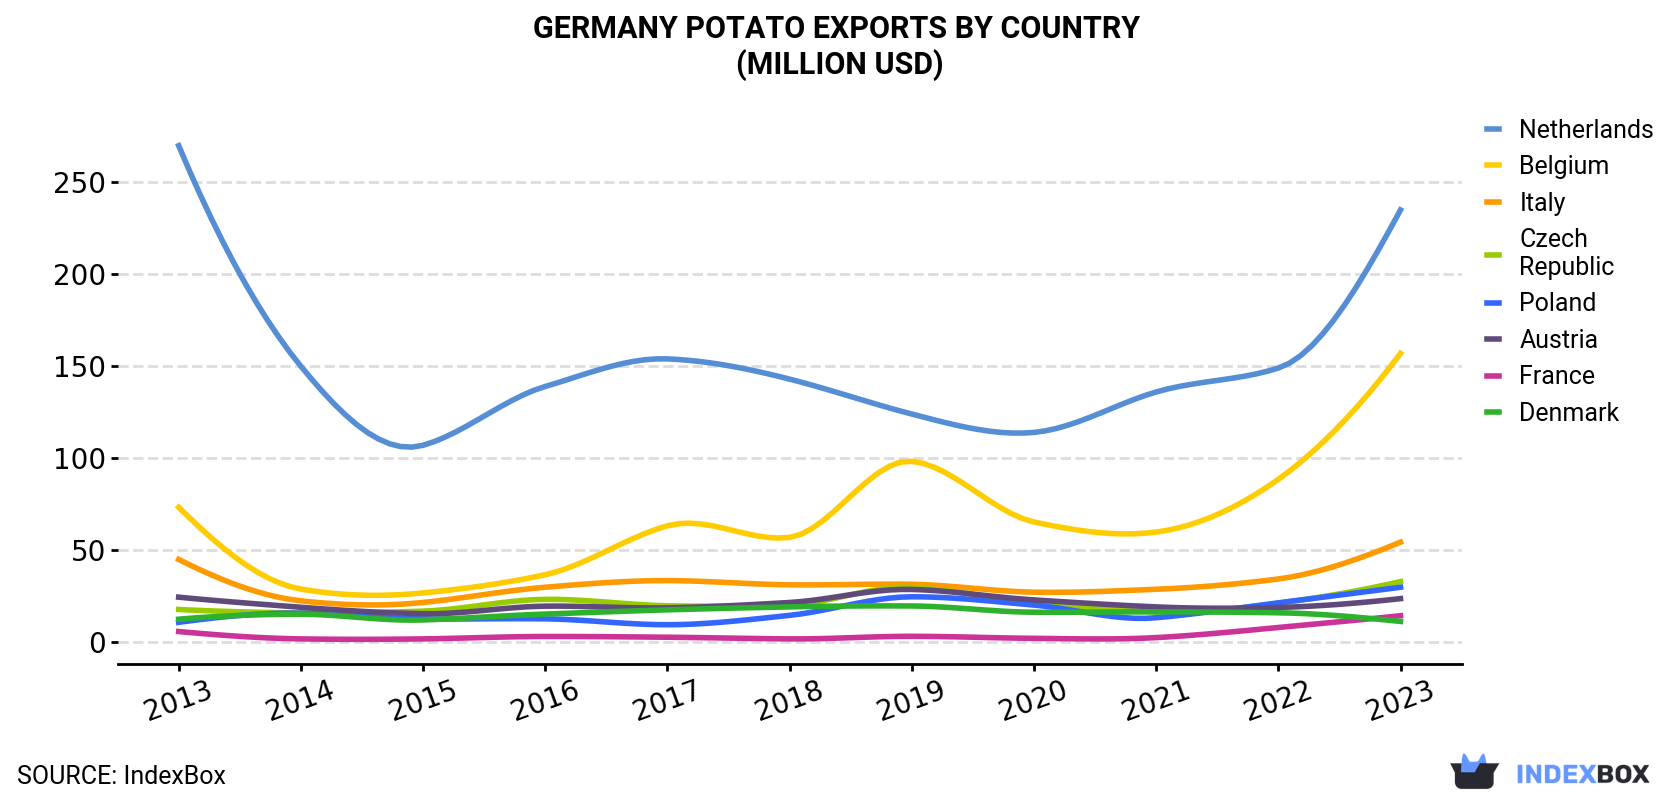 Germany Potato Exports By Country (Million USD)